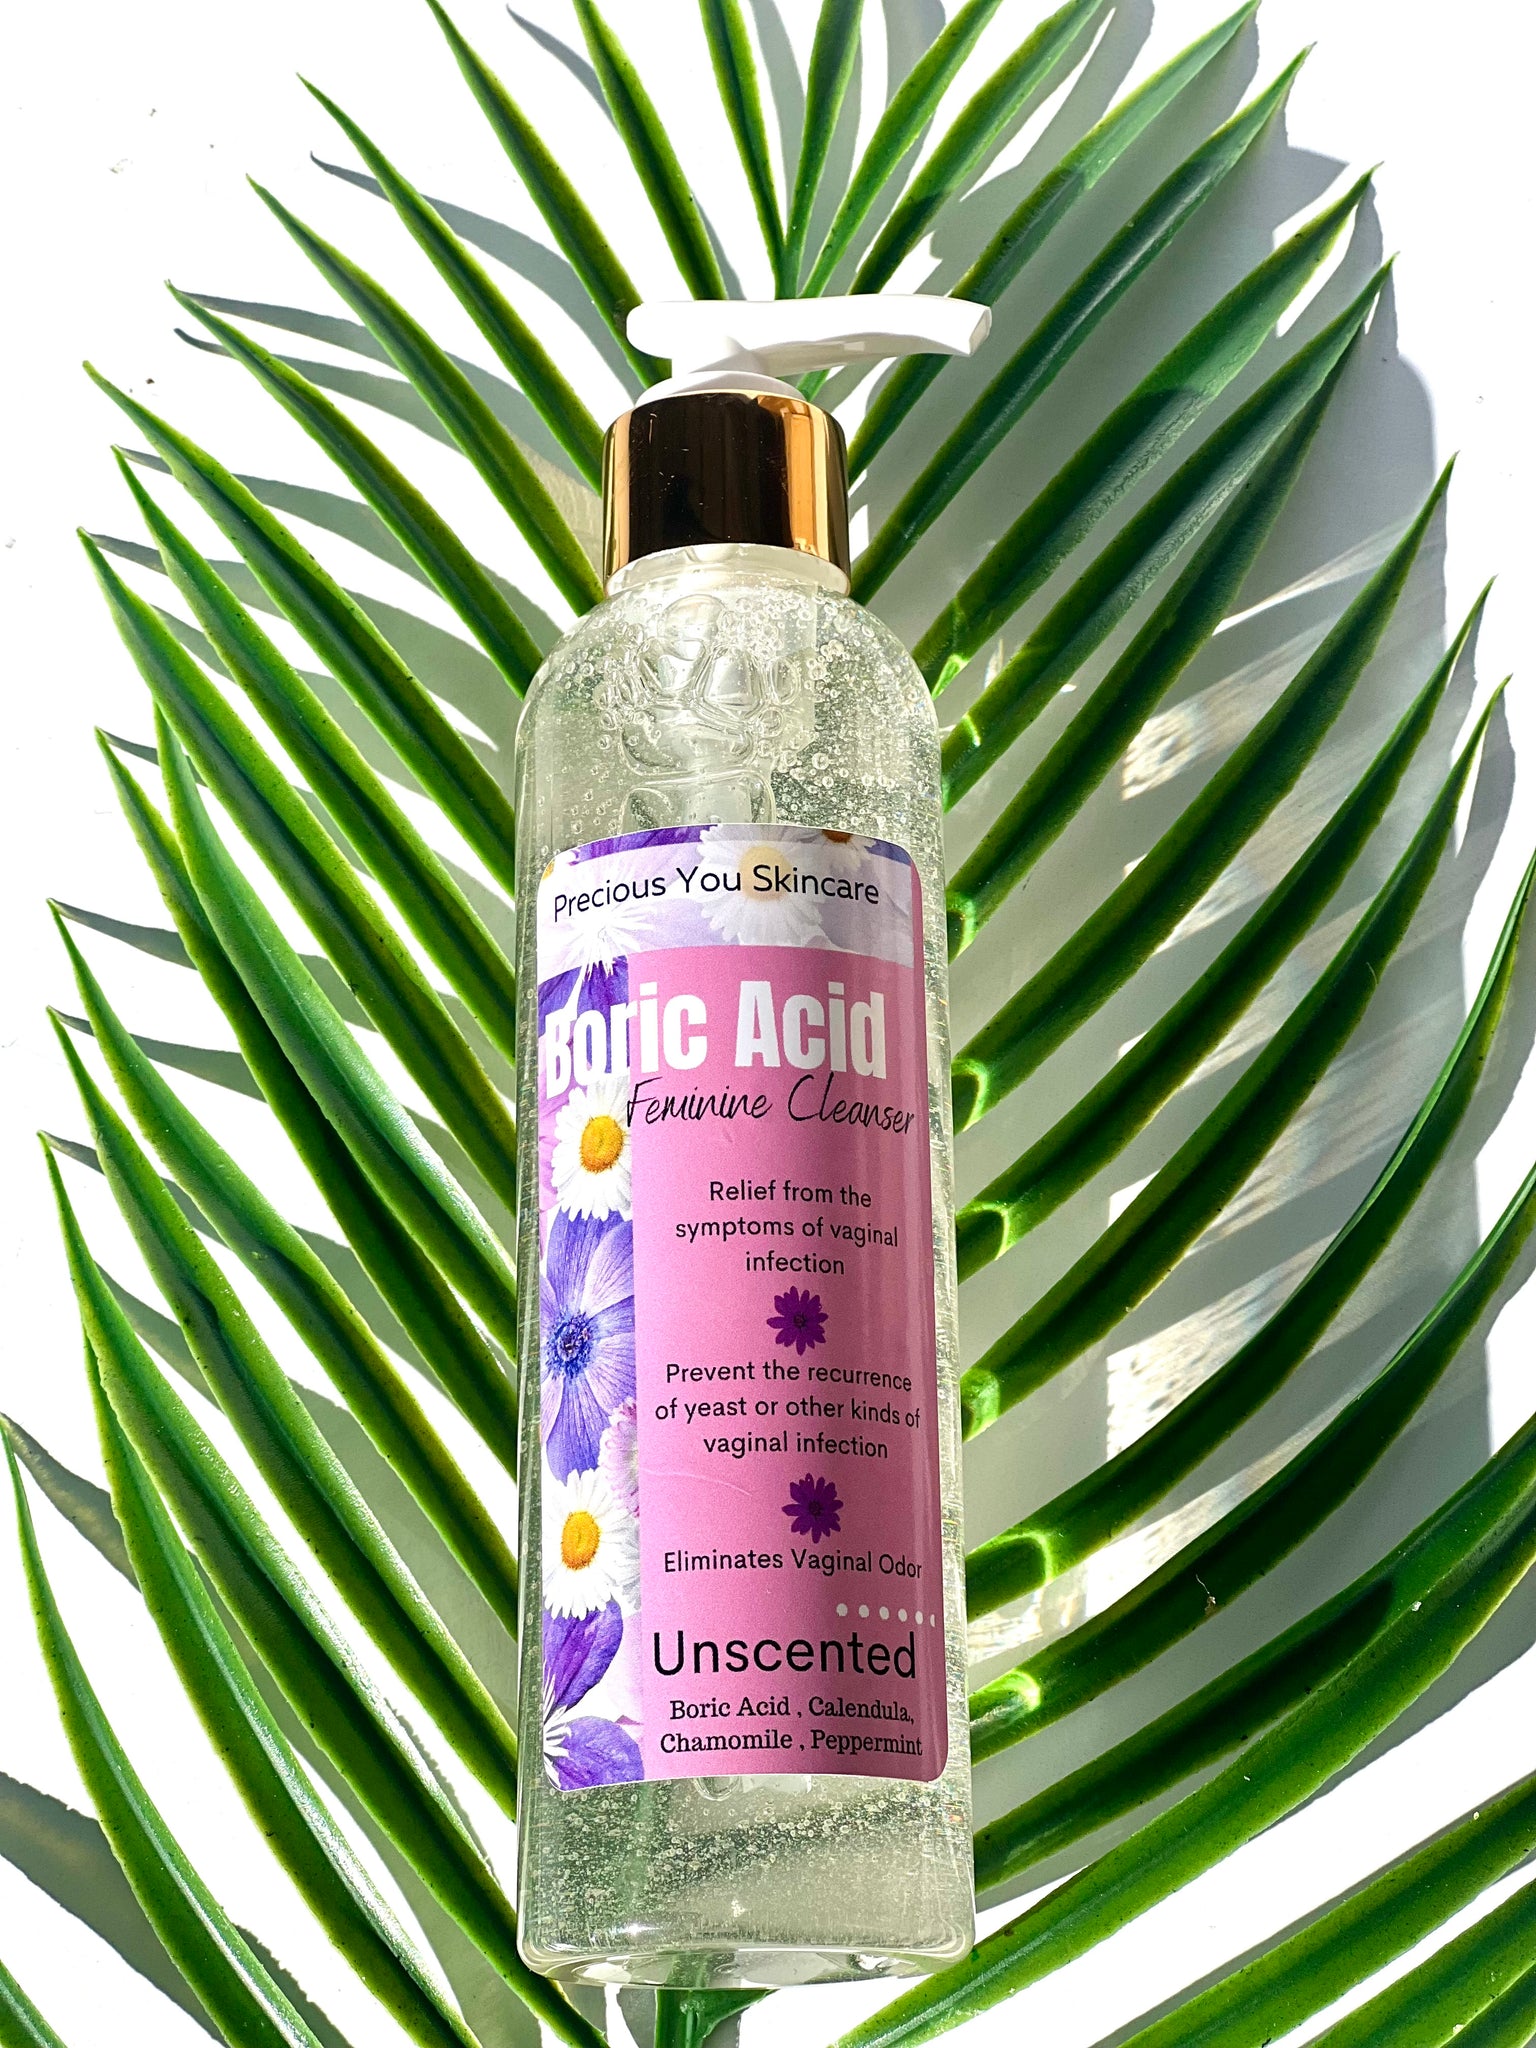 Boric Acid cleanser - Gentle unscented